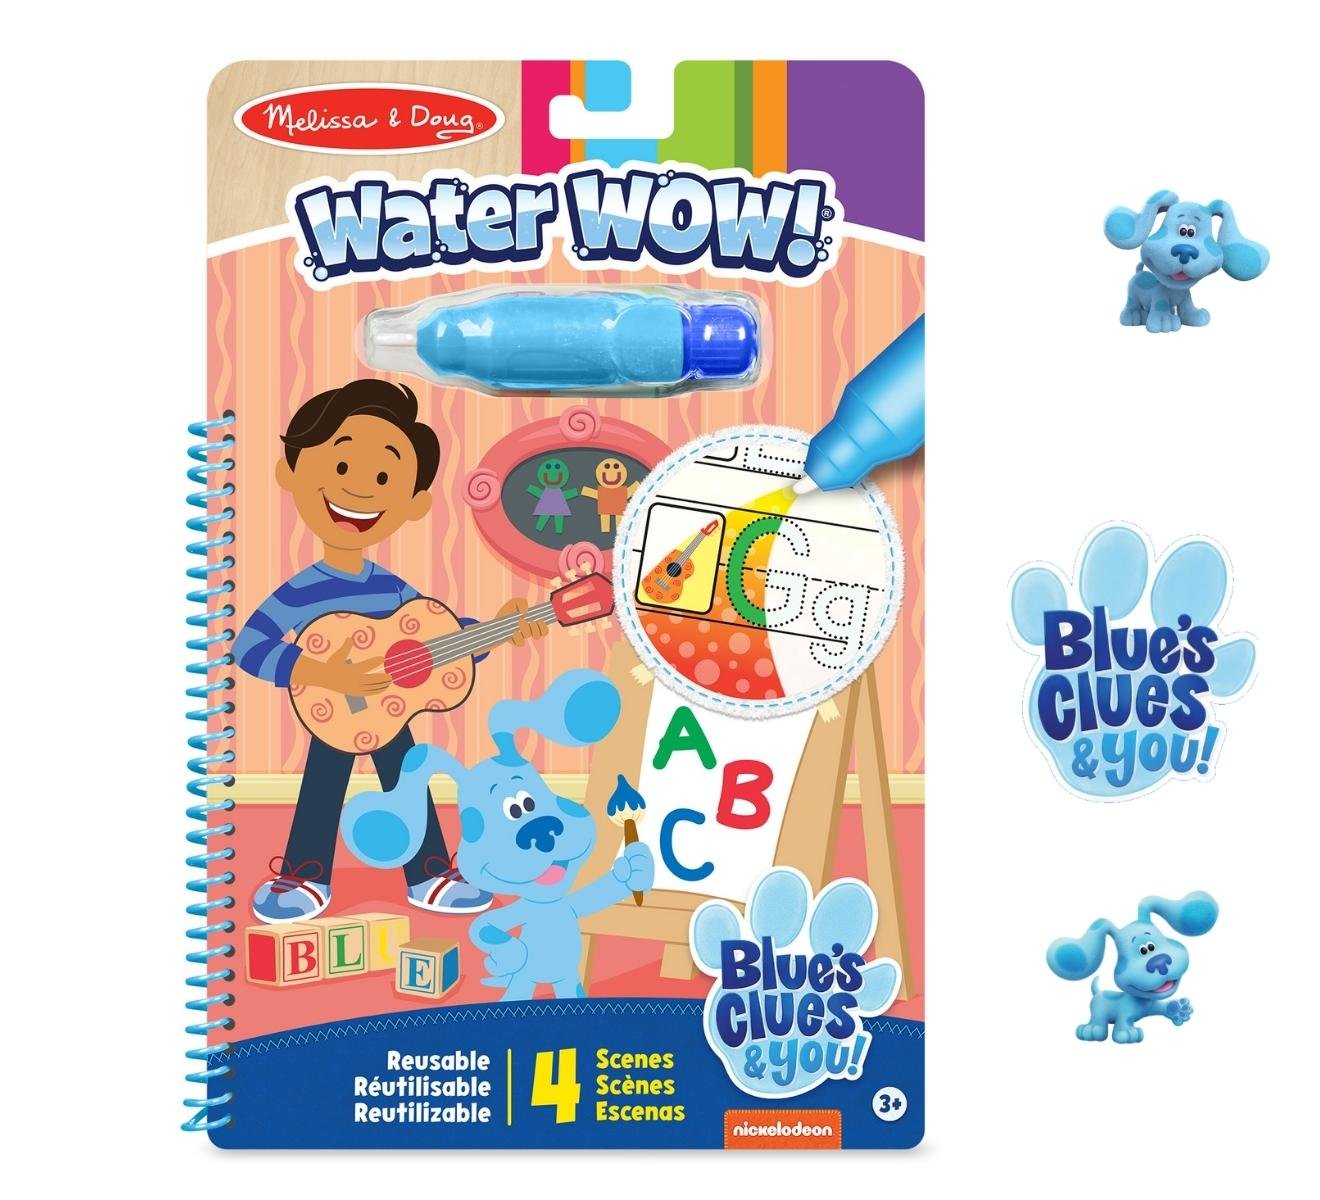 [New!! ระบายน้ำ+รียูส Blues] รุ่น 33000 ระบายสีน้ำ Blue's Clues & You! Water Wow รุ่น Alphabet รีวิวดีใน Amazon USA ฝึกการออกแบบตกแต่ง เสริมสร้างจินตนาการ ไม่เหมือนใคร